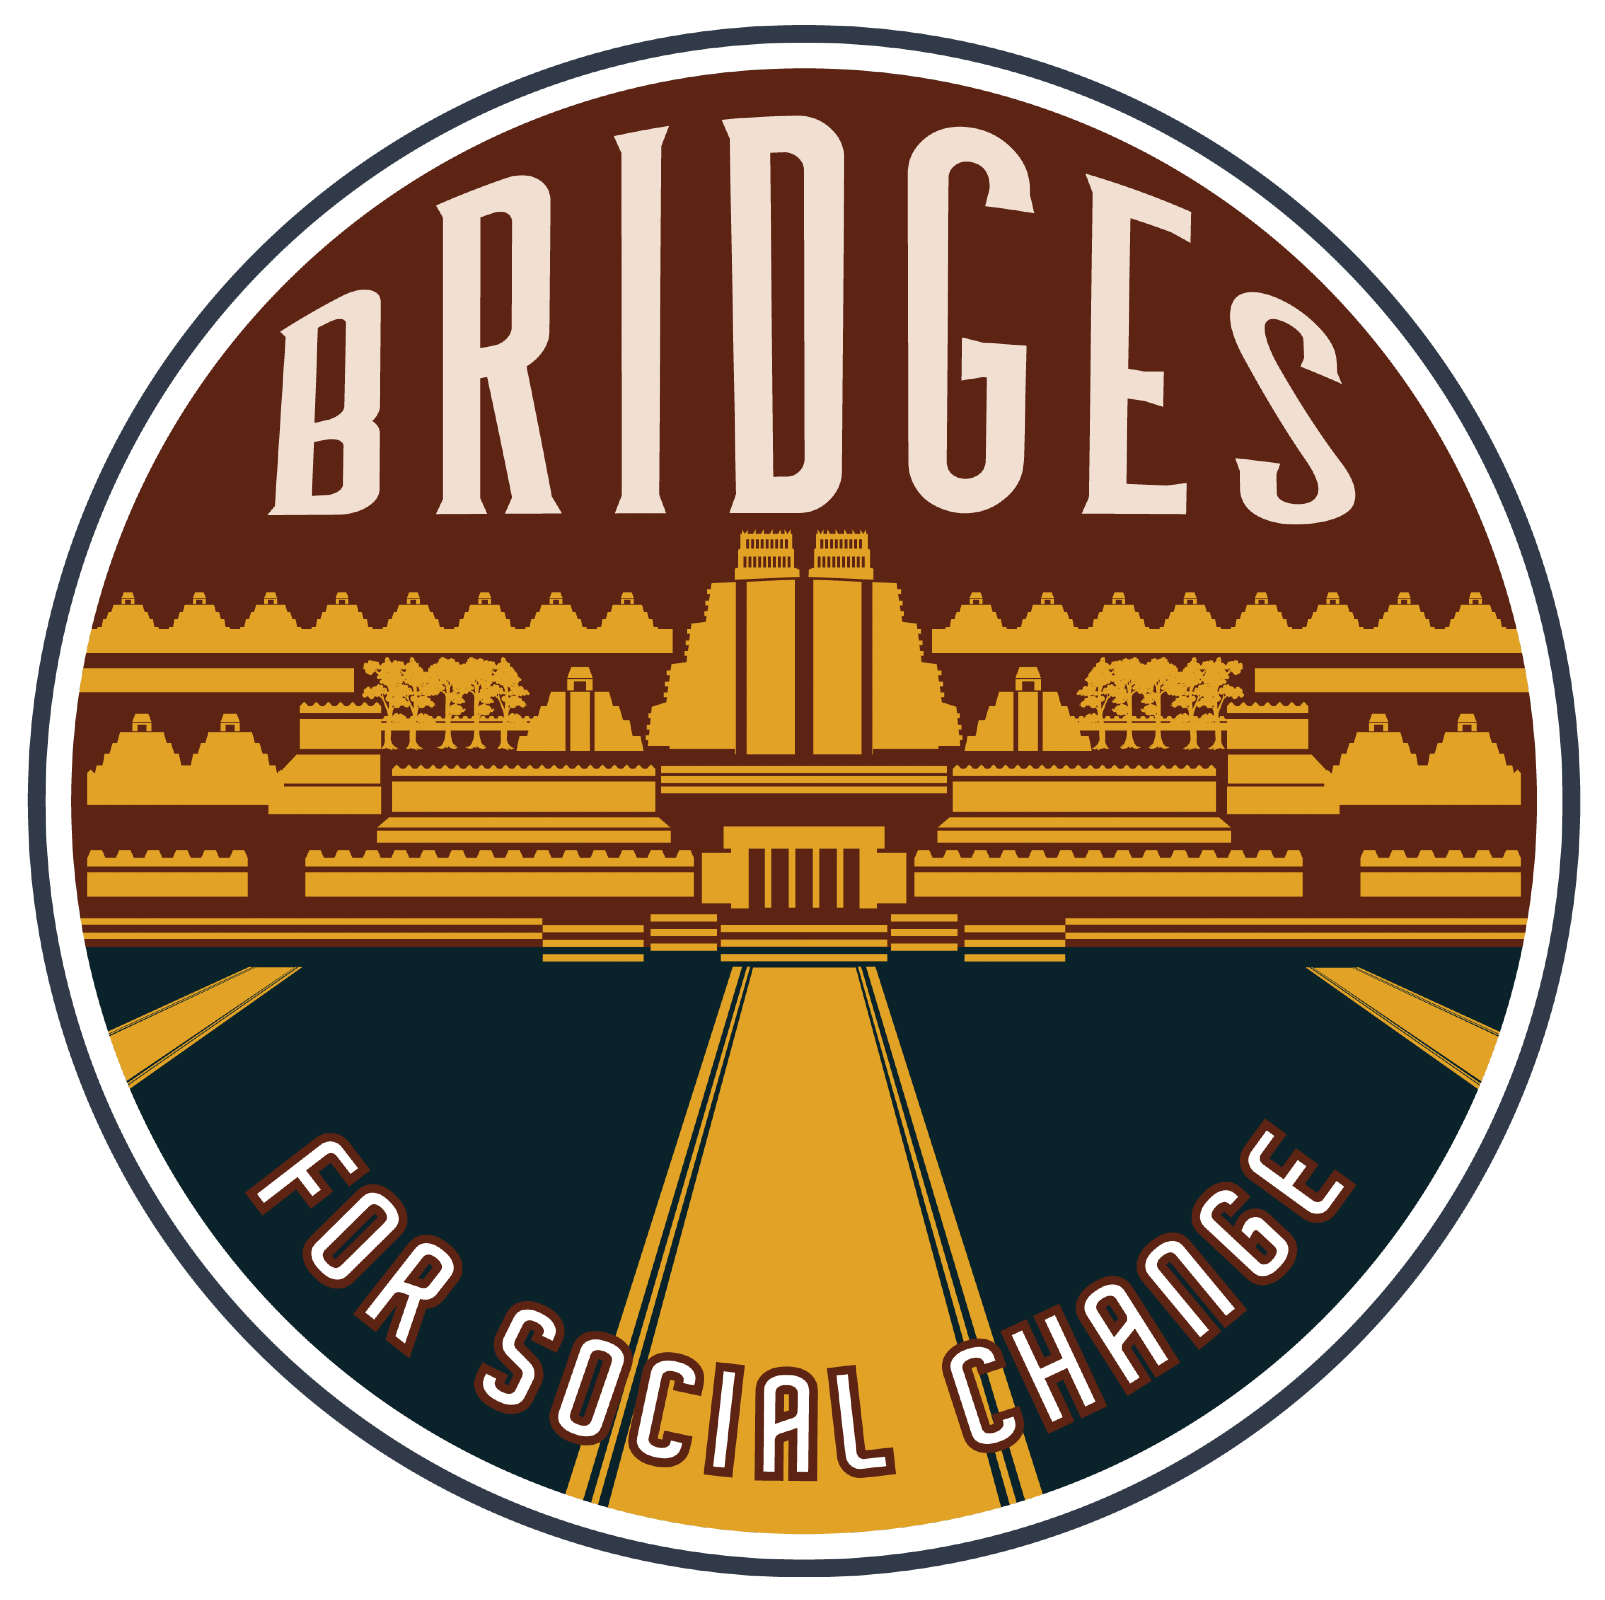 Bridges for Social Change Logo